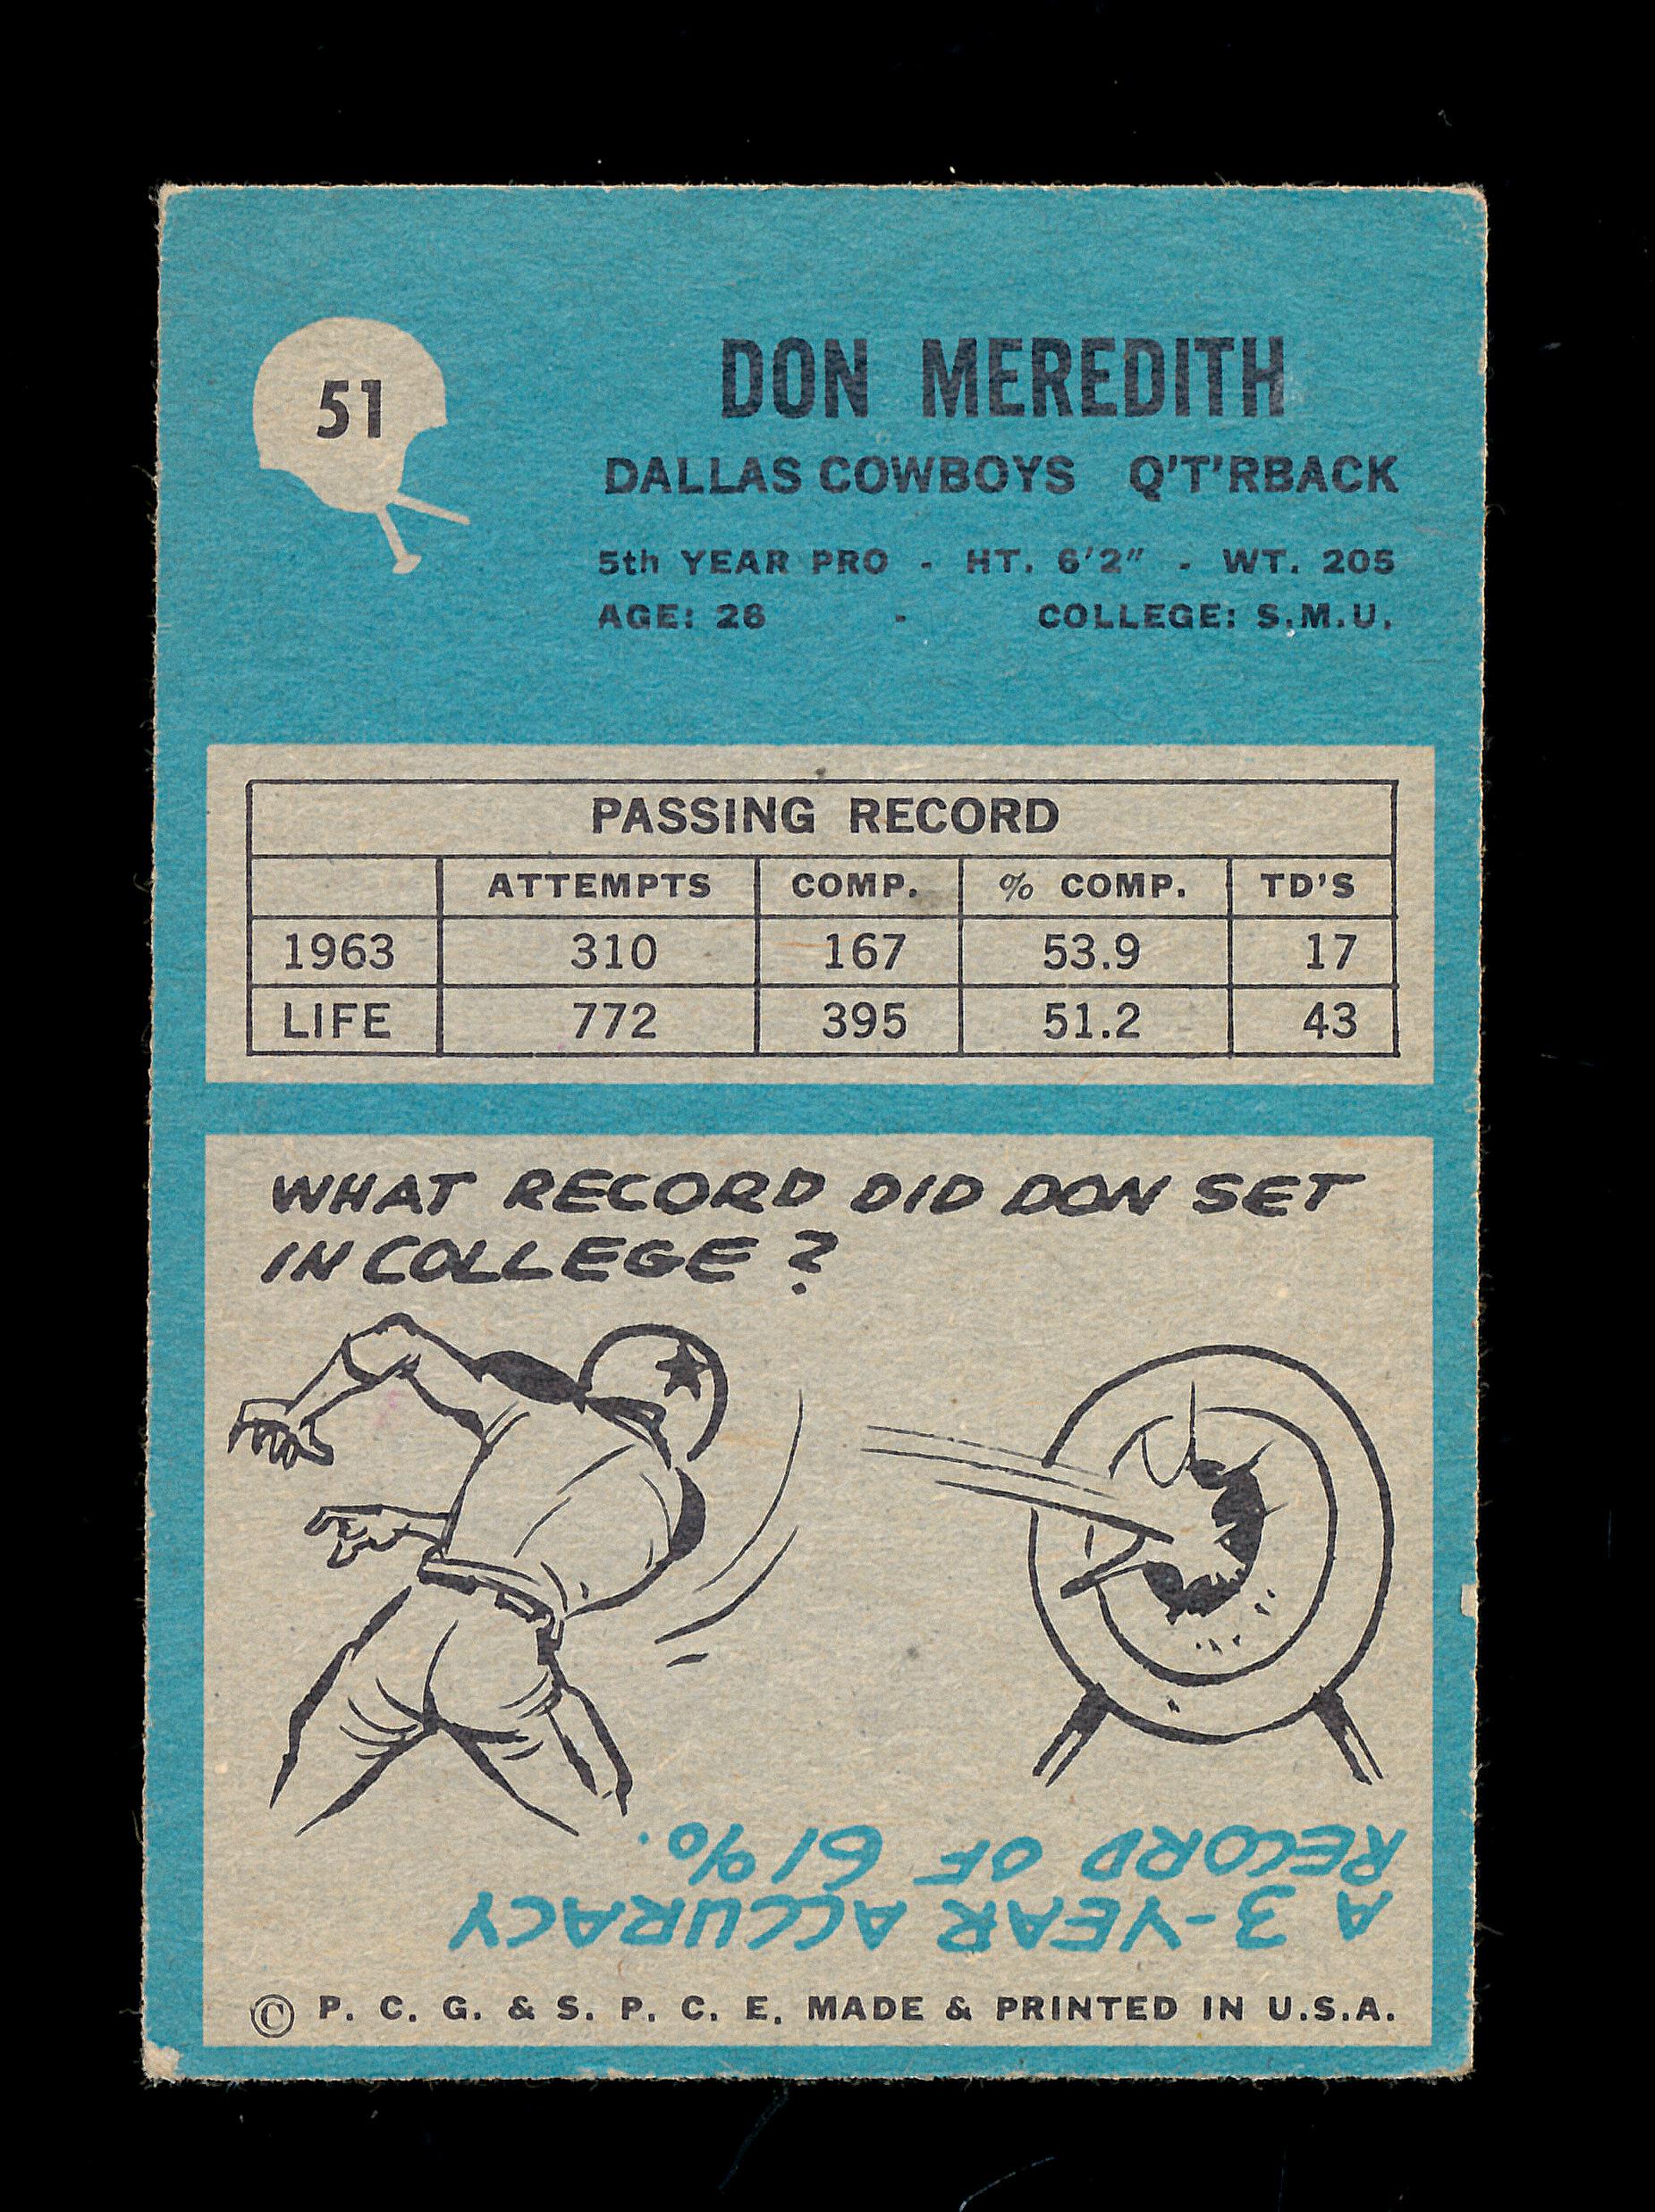 1964 Philadelphia Football Card #51 Don Meredith Dallas Cowboys. EX to EX-M